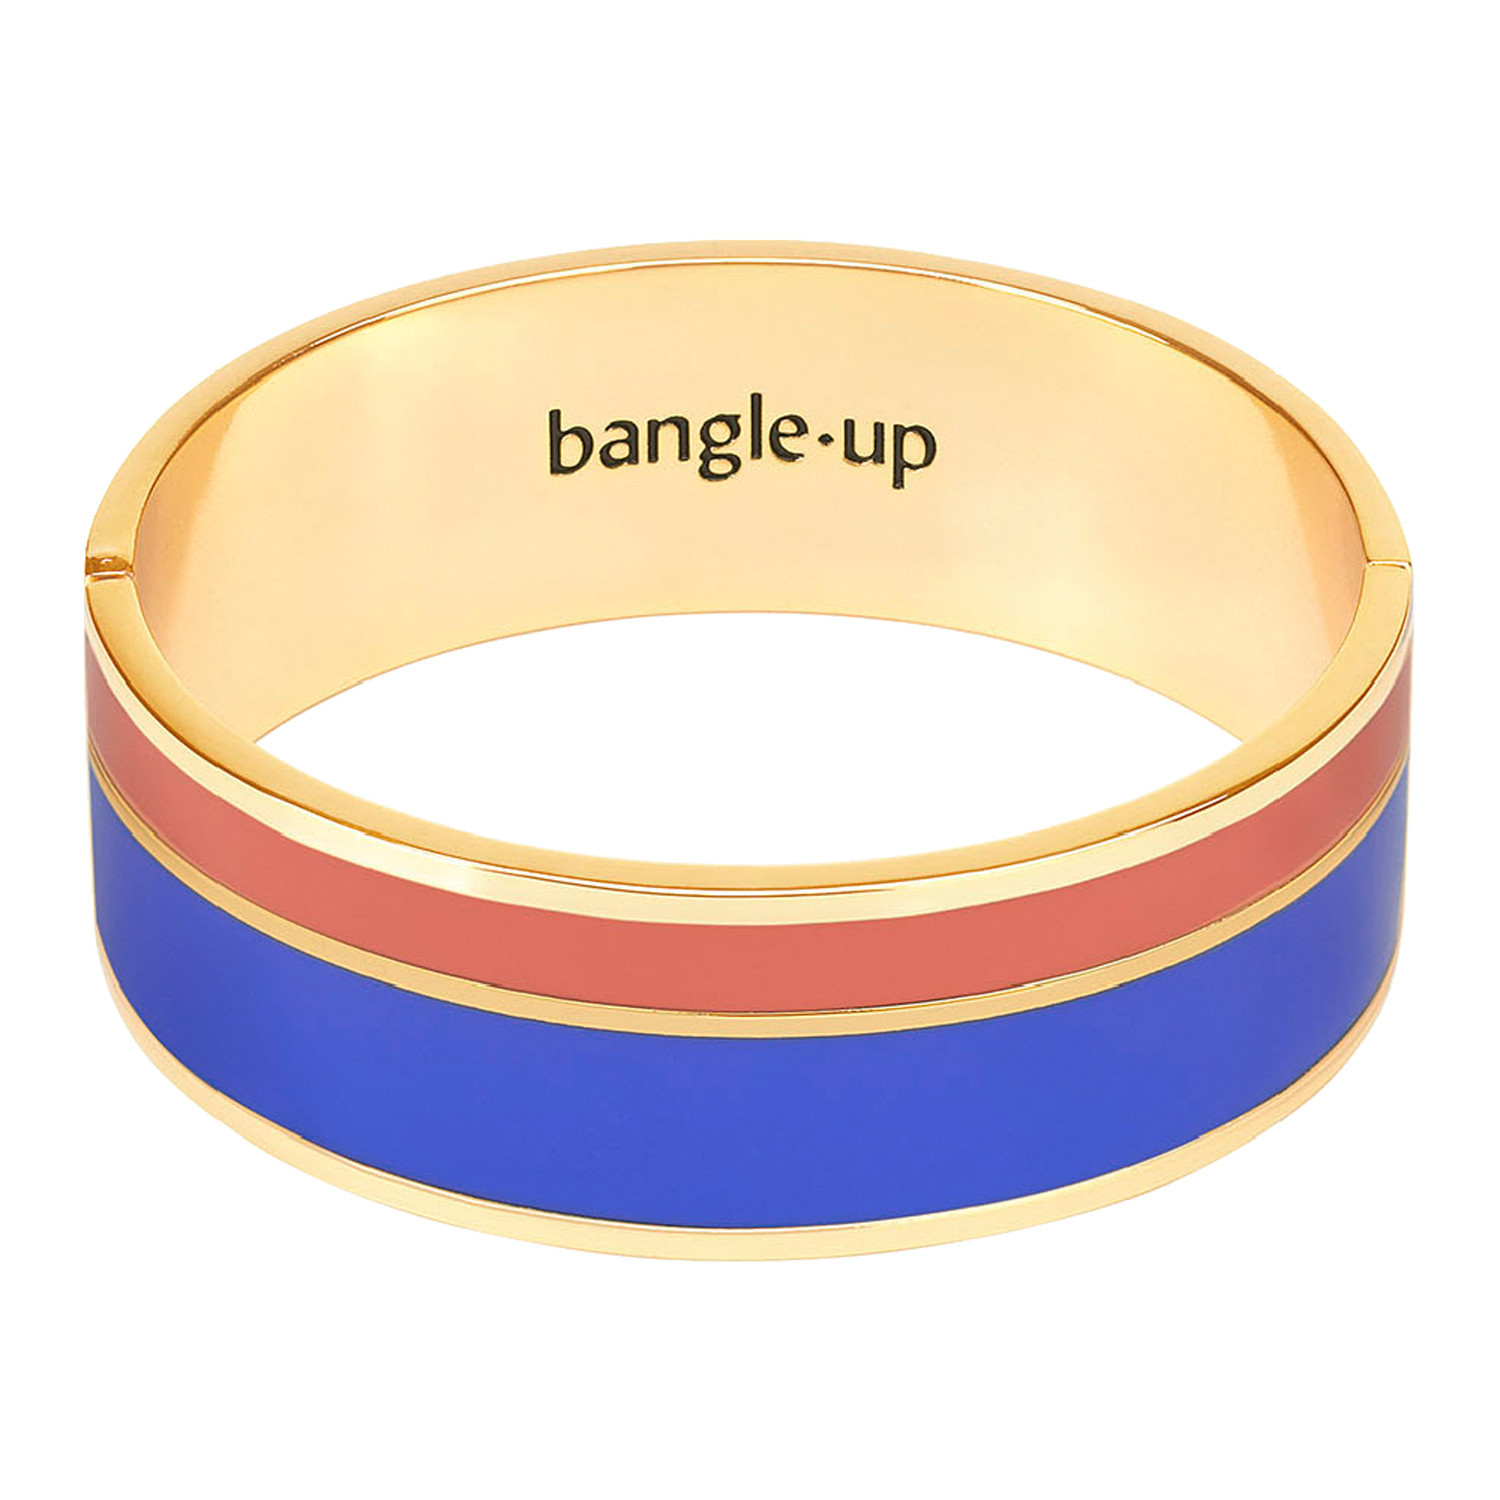 Bracelet jonc Bangle Up Vaporetto bleu et orange
taille 1